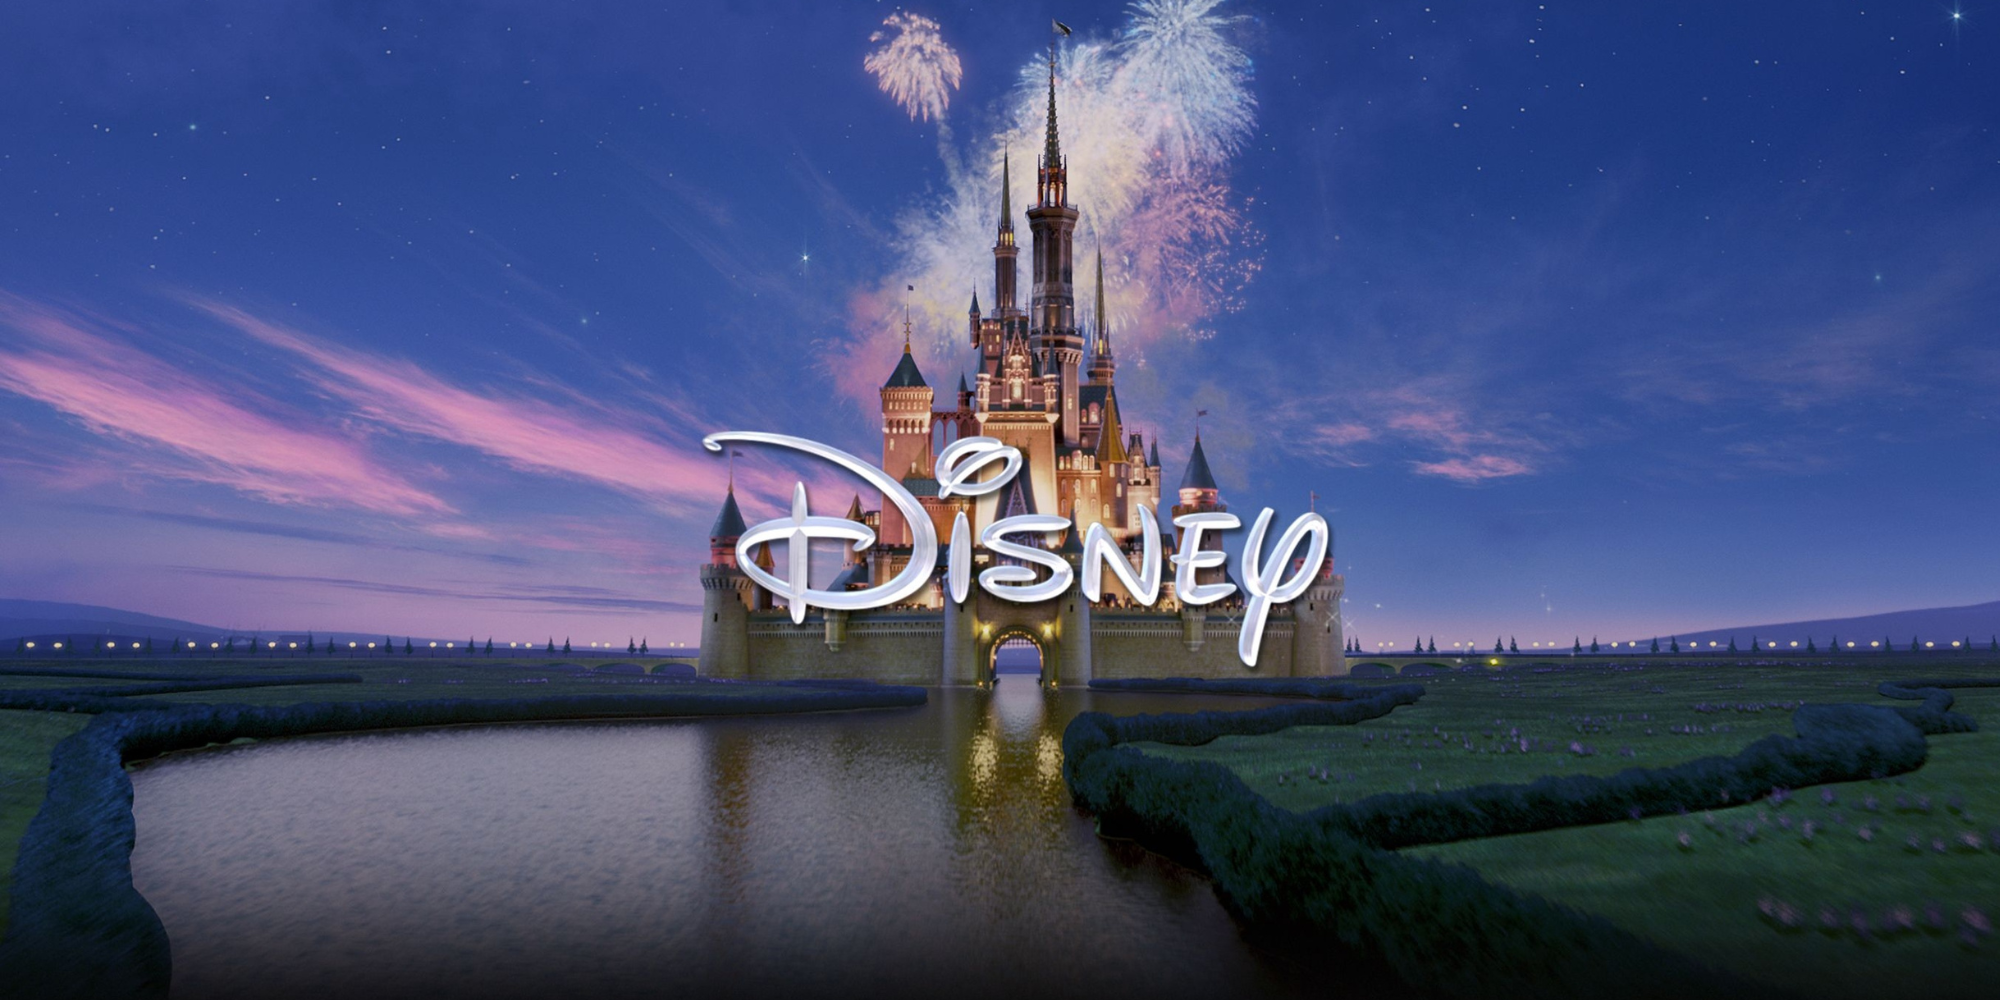 10 Best Hand-Drawn Disney Movies, According To IMDb